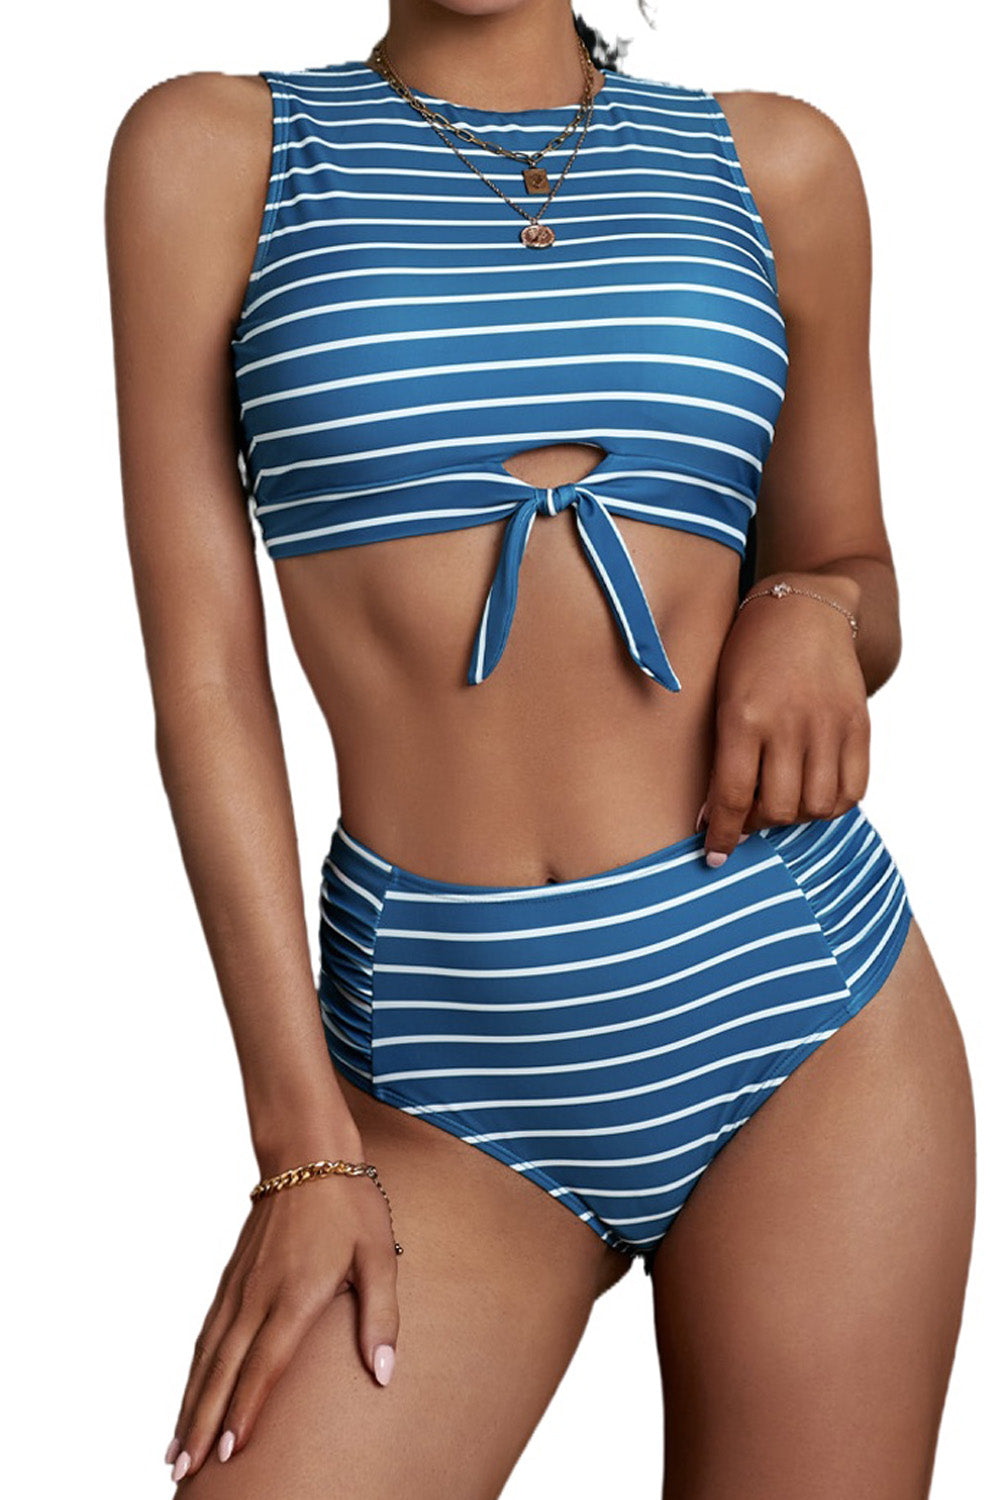 Striped Tie Knot High Waist Bikini (Blue Striped)